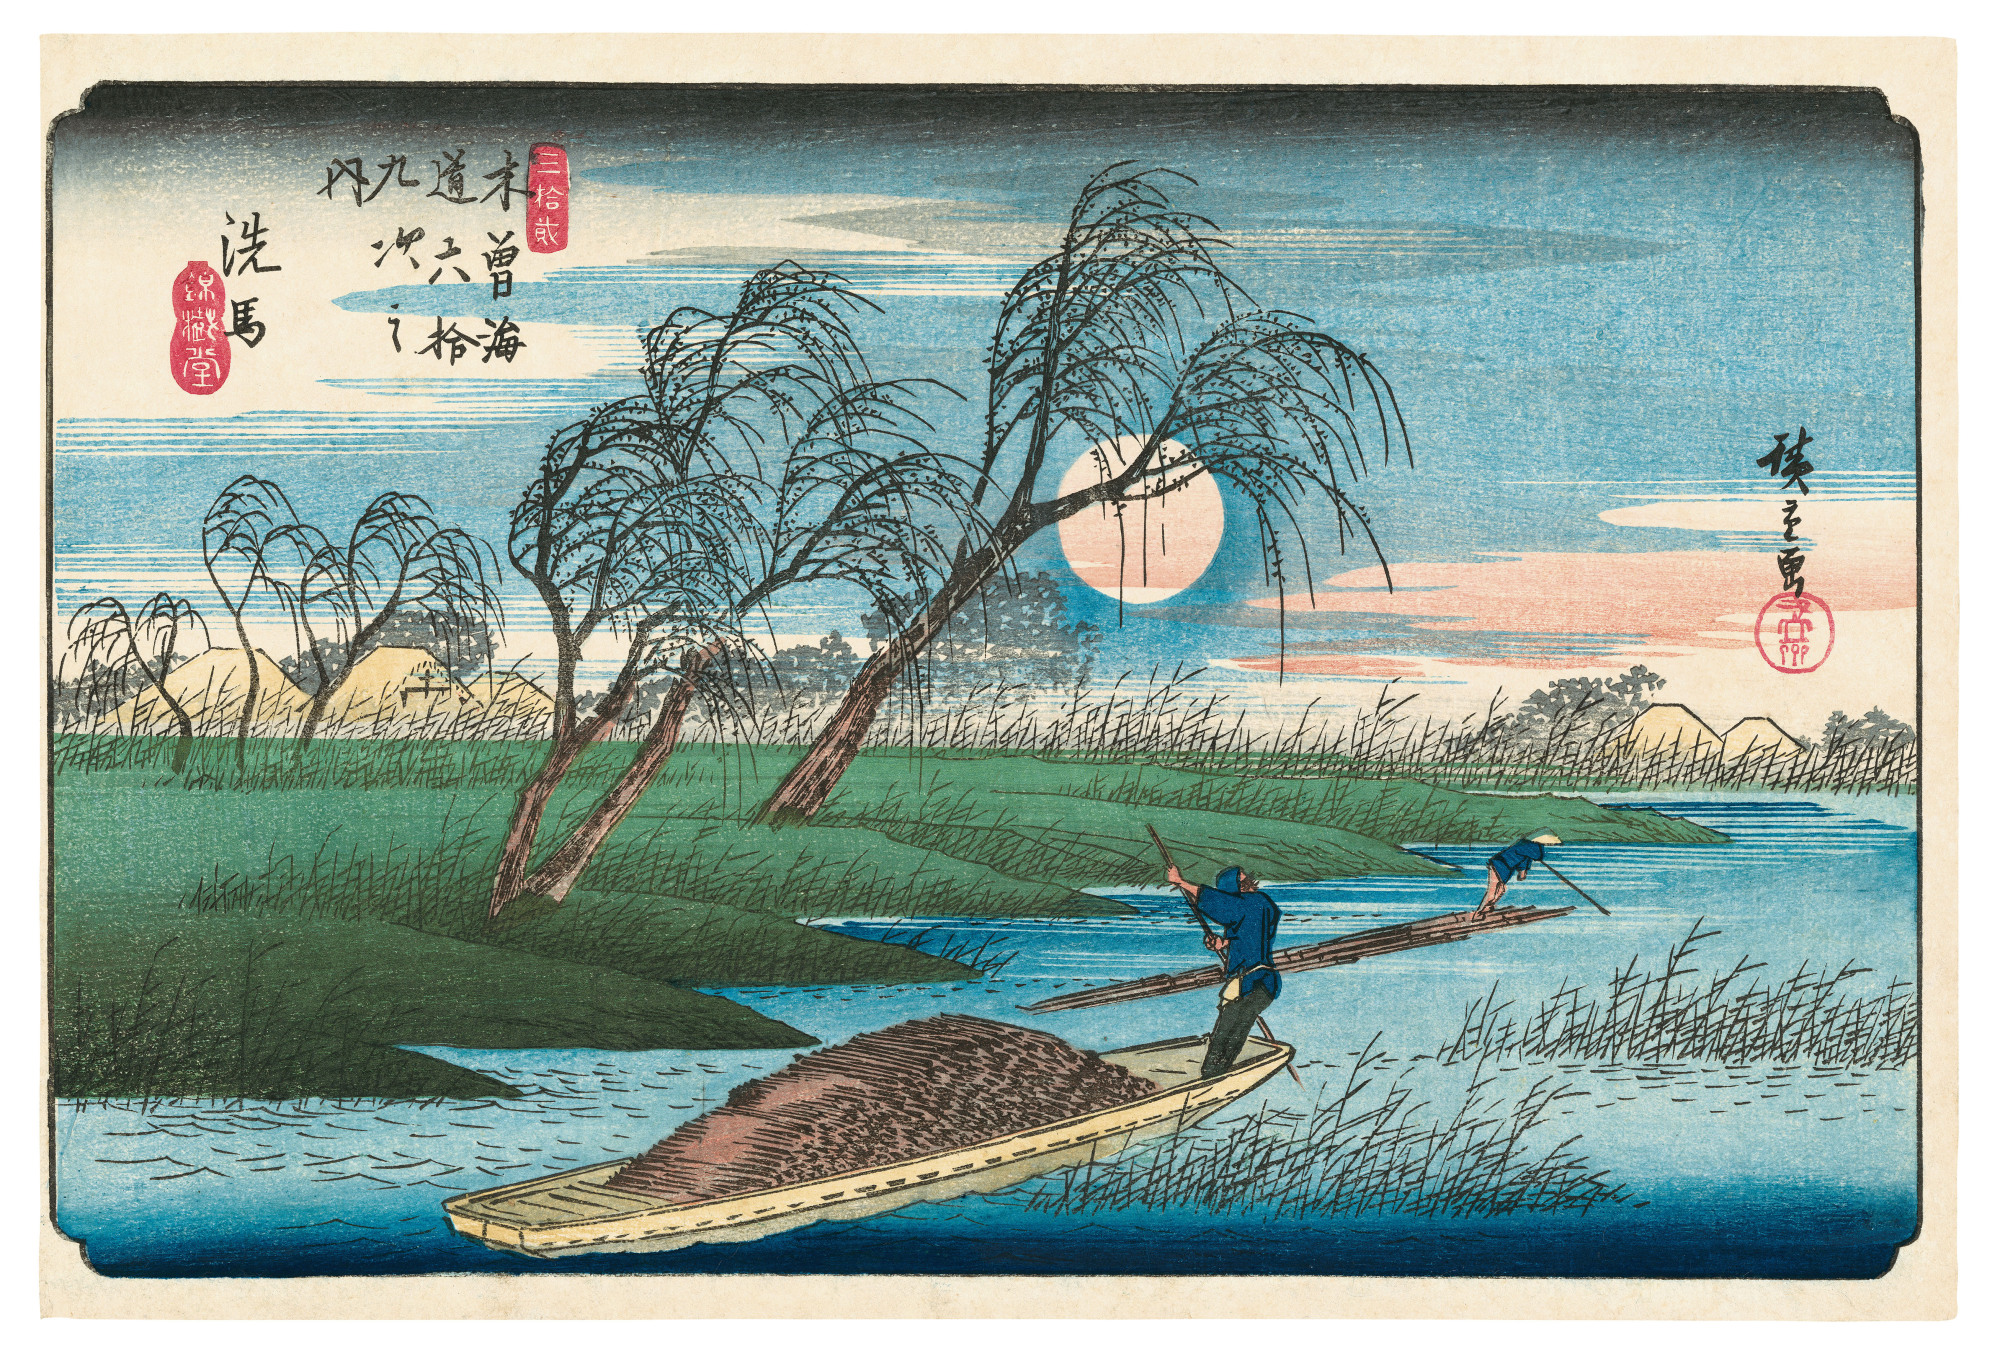 Print by Japanese artist, Hiroshige.